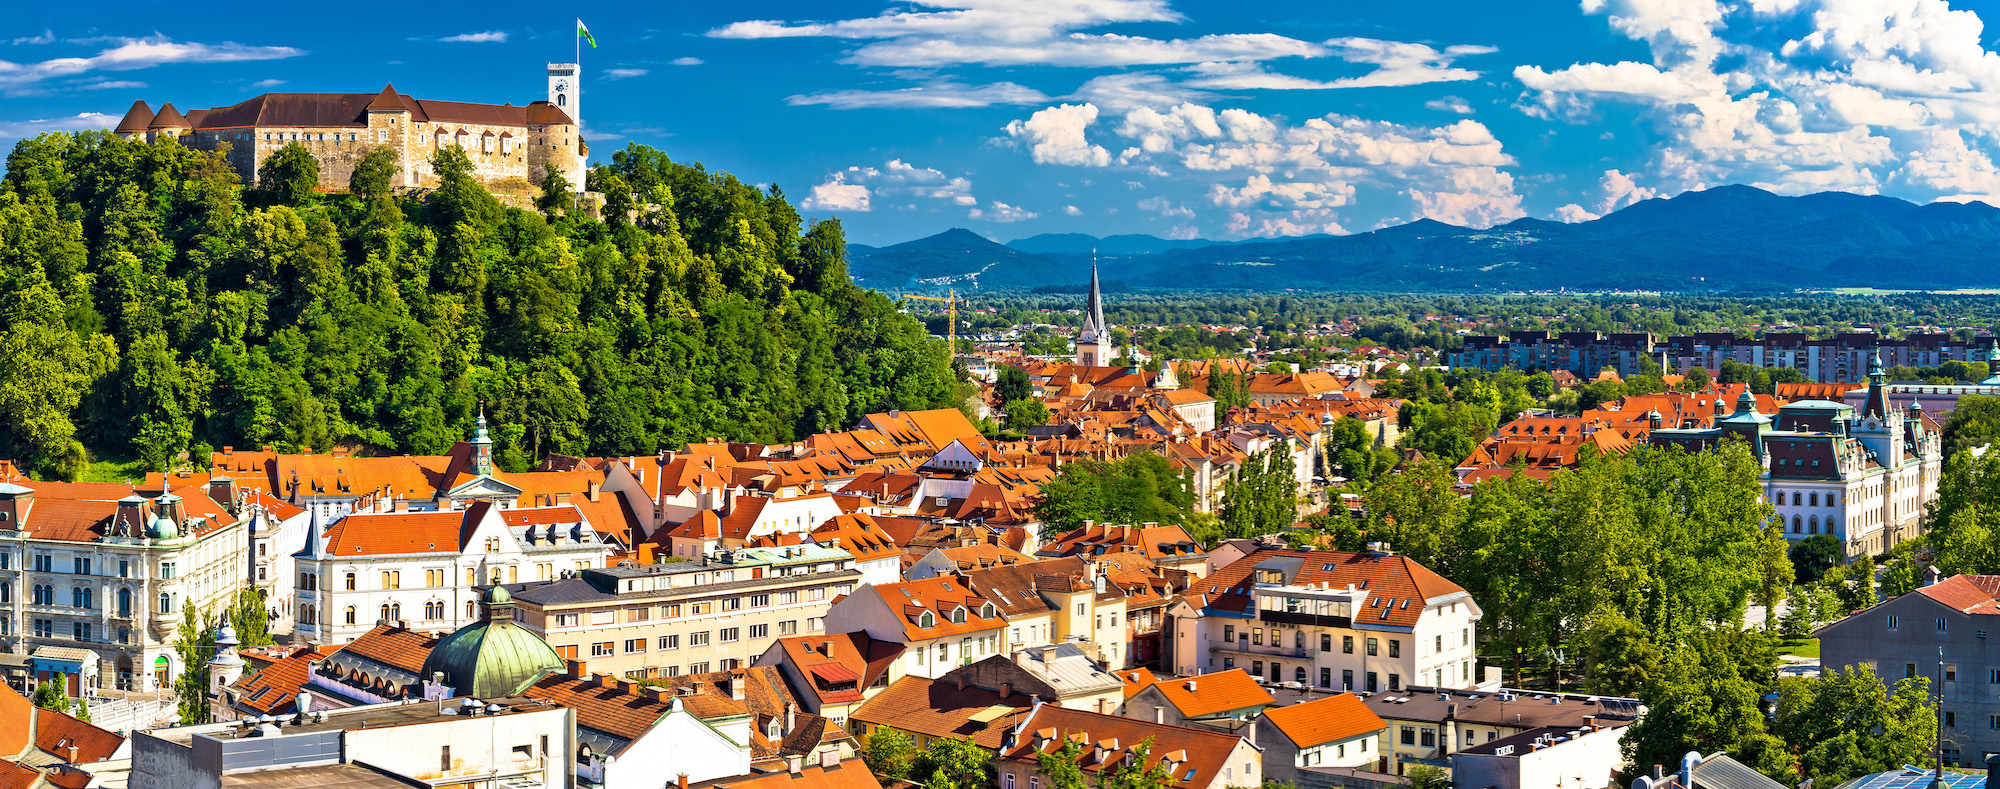 Sustainable tourism development and marketing strategy for Ljubljana and the Ljubljana region 2020-2025